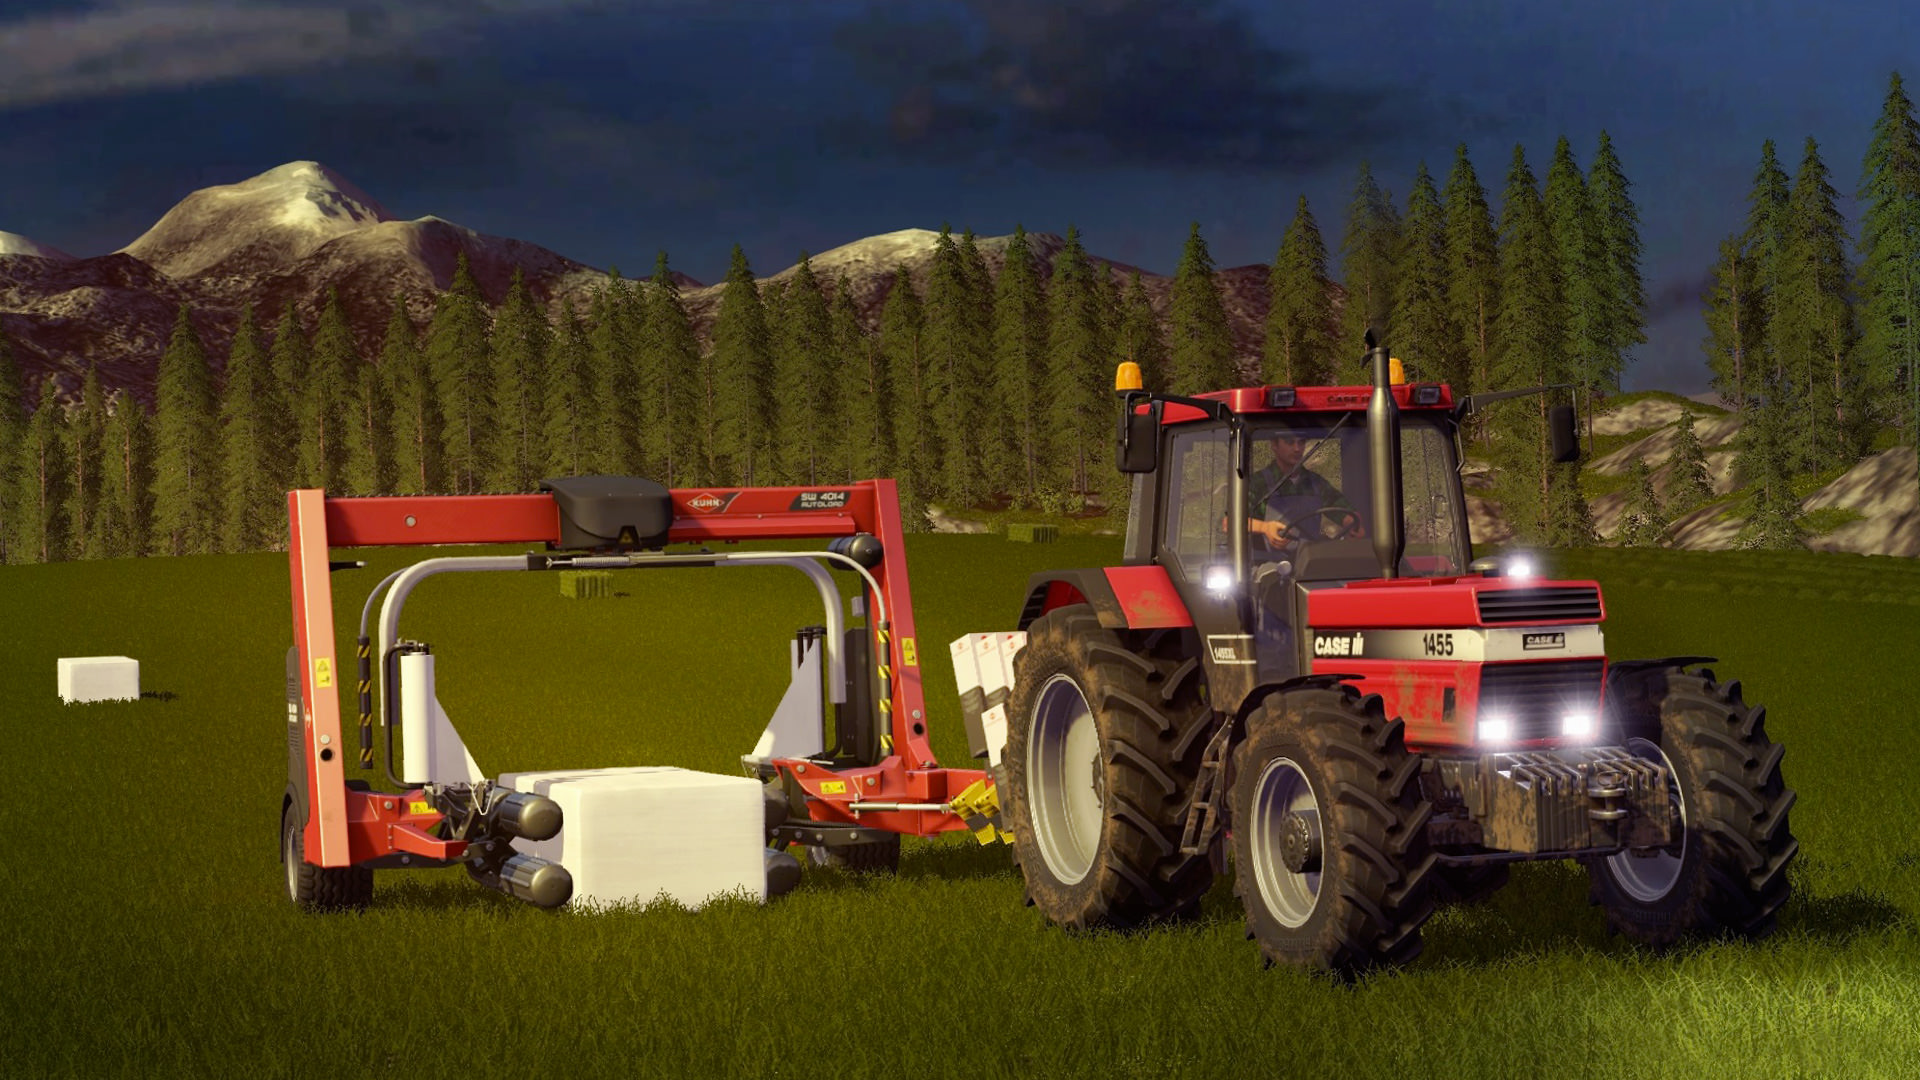 farming simulator 17 free download